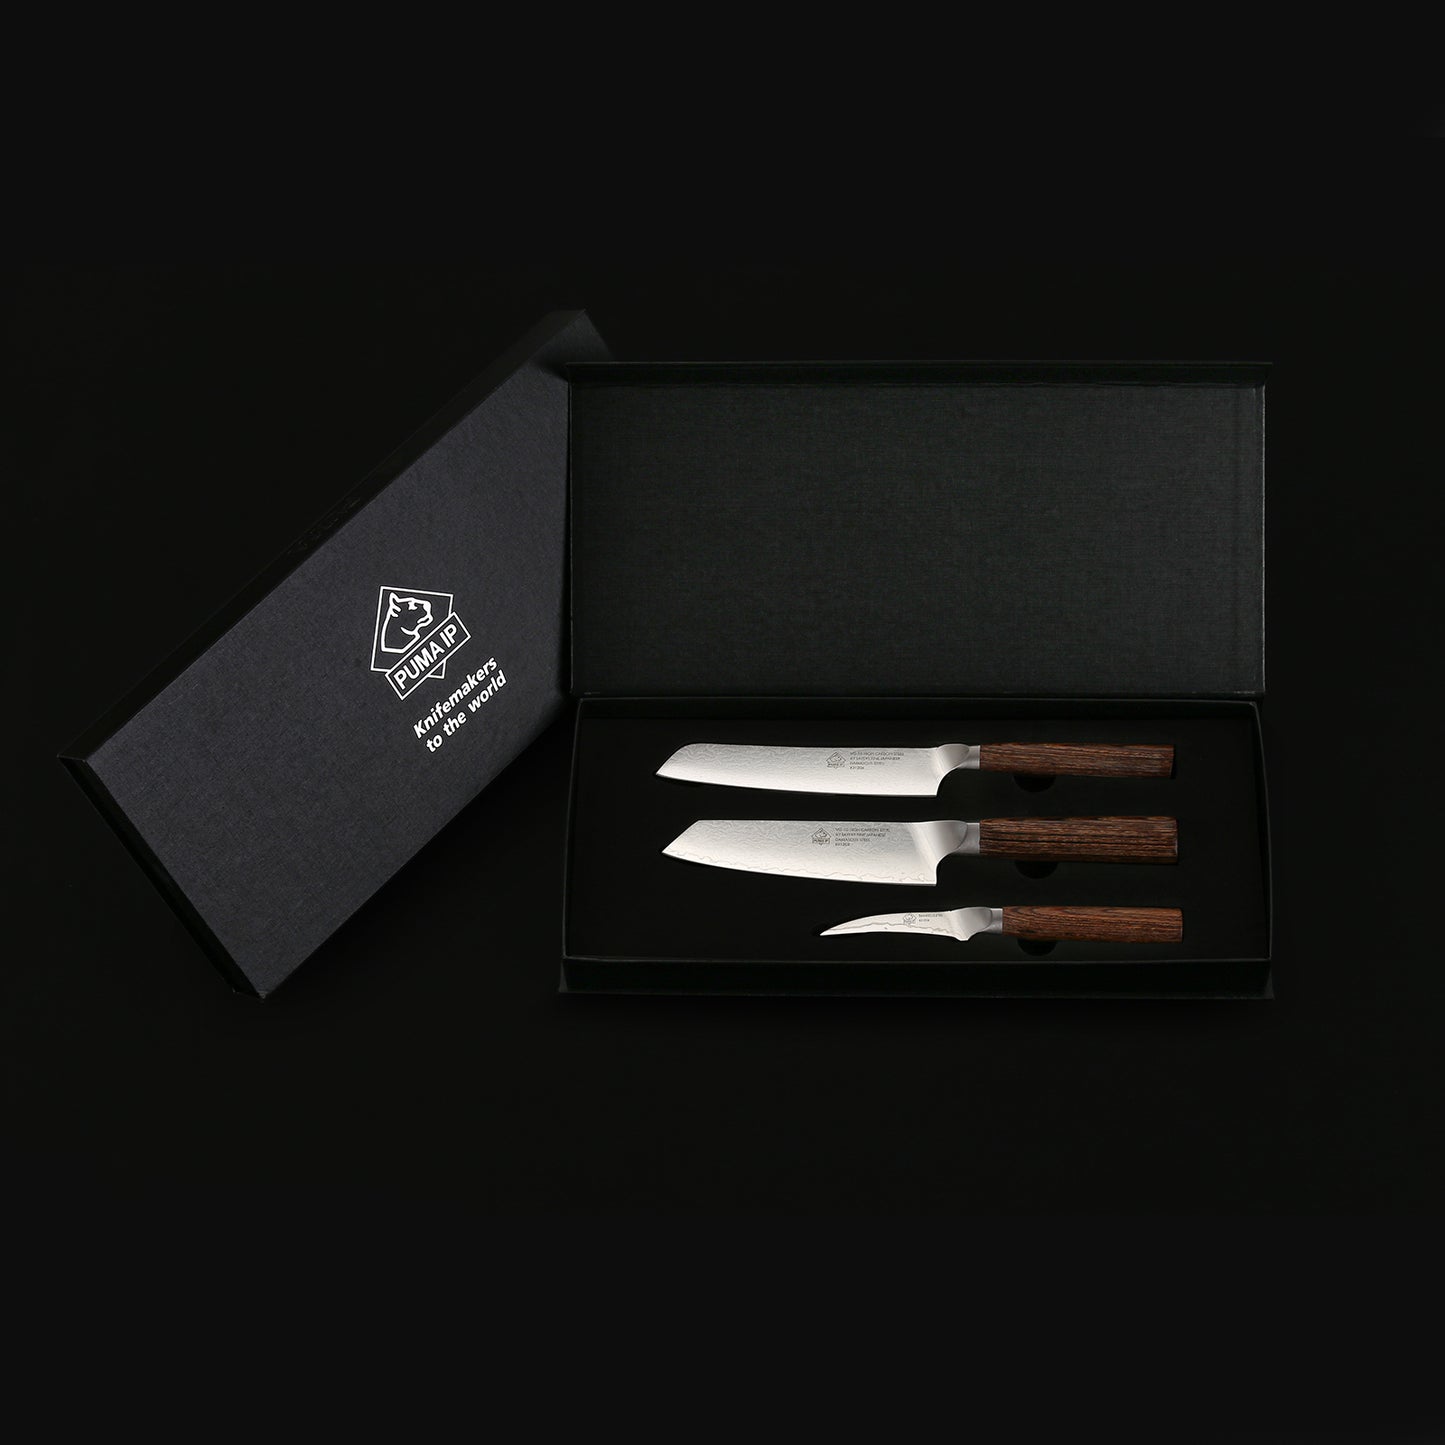 PUMA IP set of 3: small chef, santoku & curved paring knife